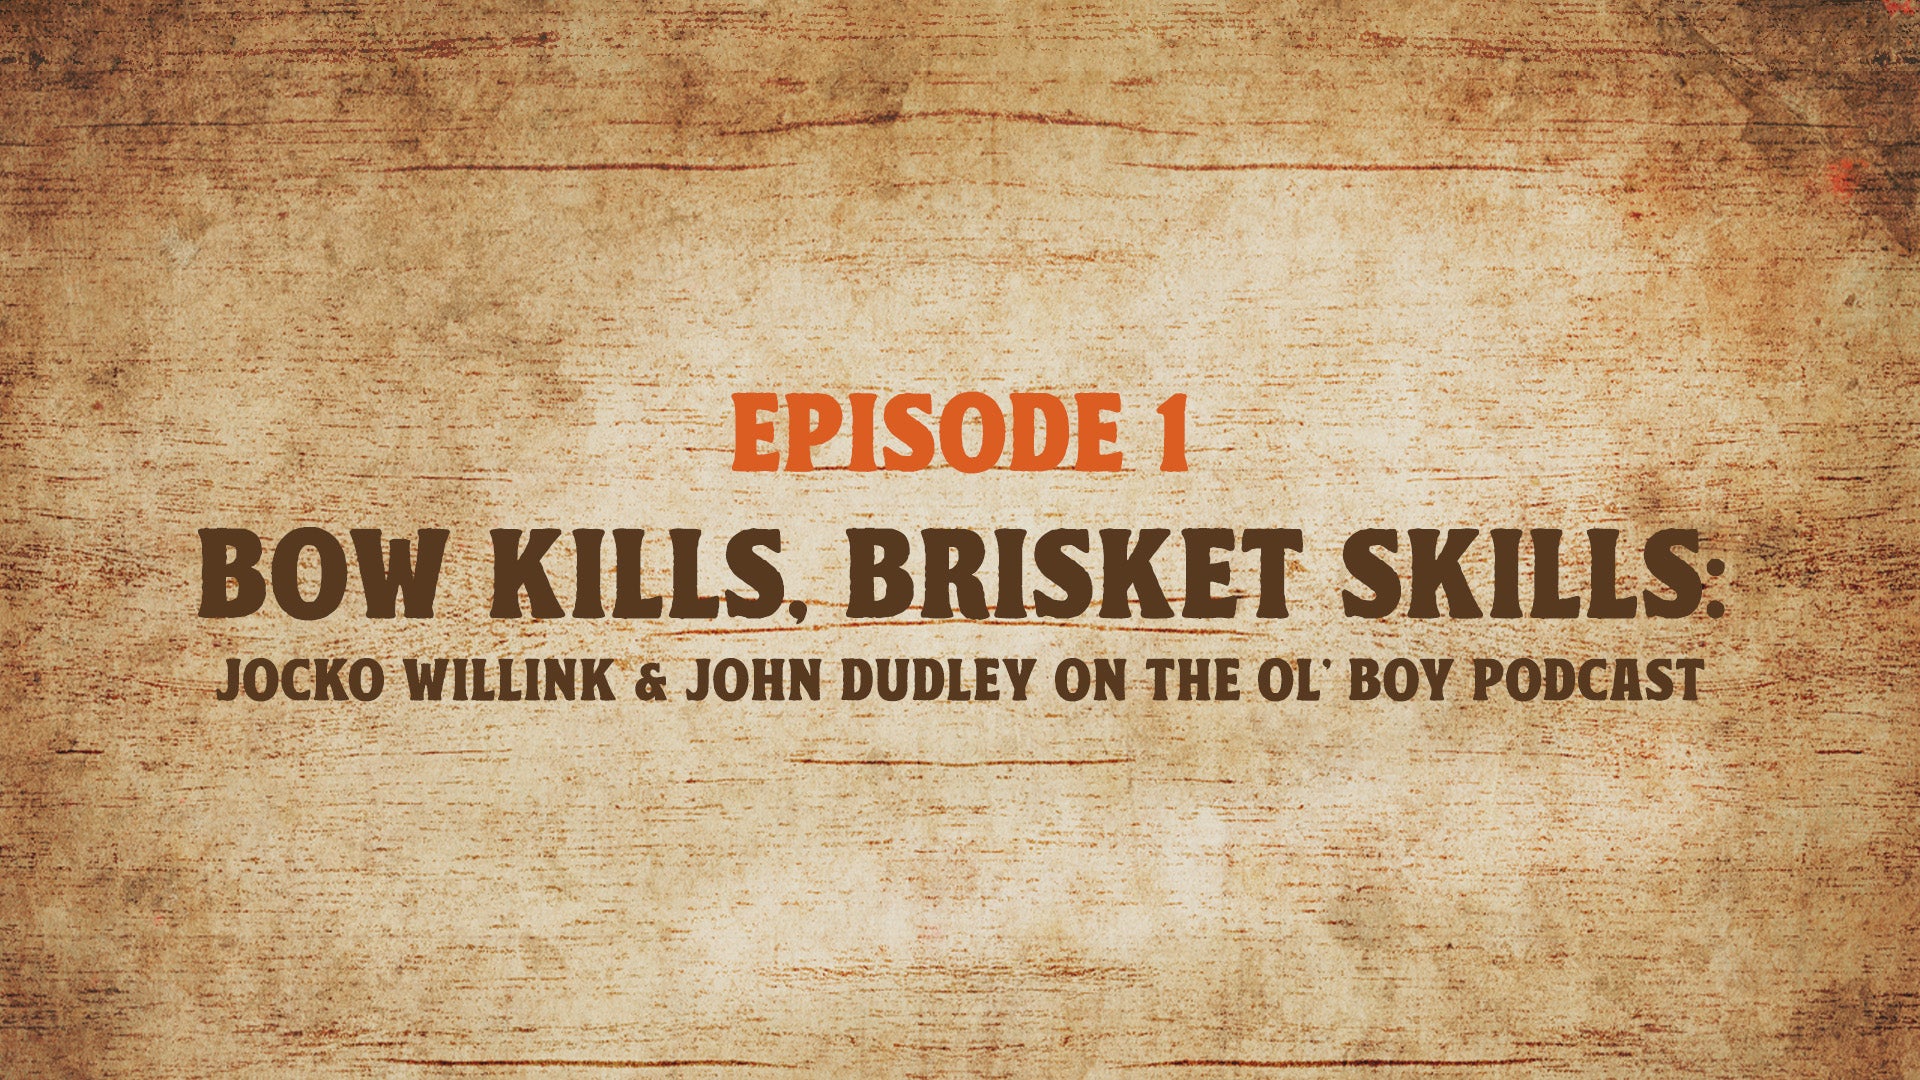 Episode 1 - Bow Kills, Brisket Skills: Jocko Willink & John Dudley on the Ol' Boy Podcast